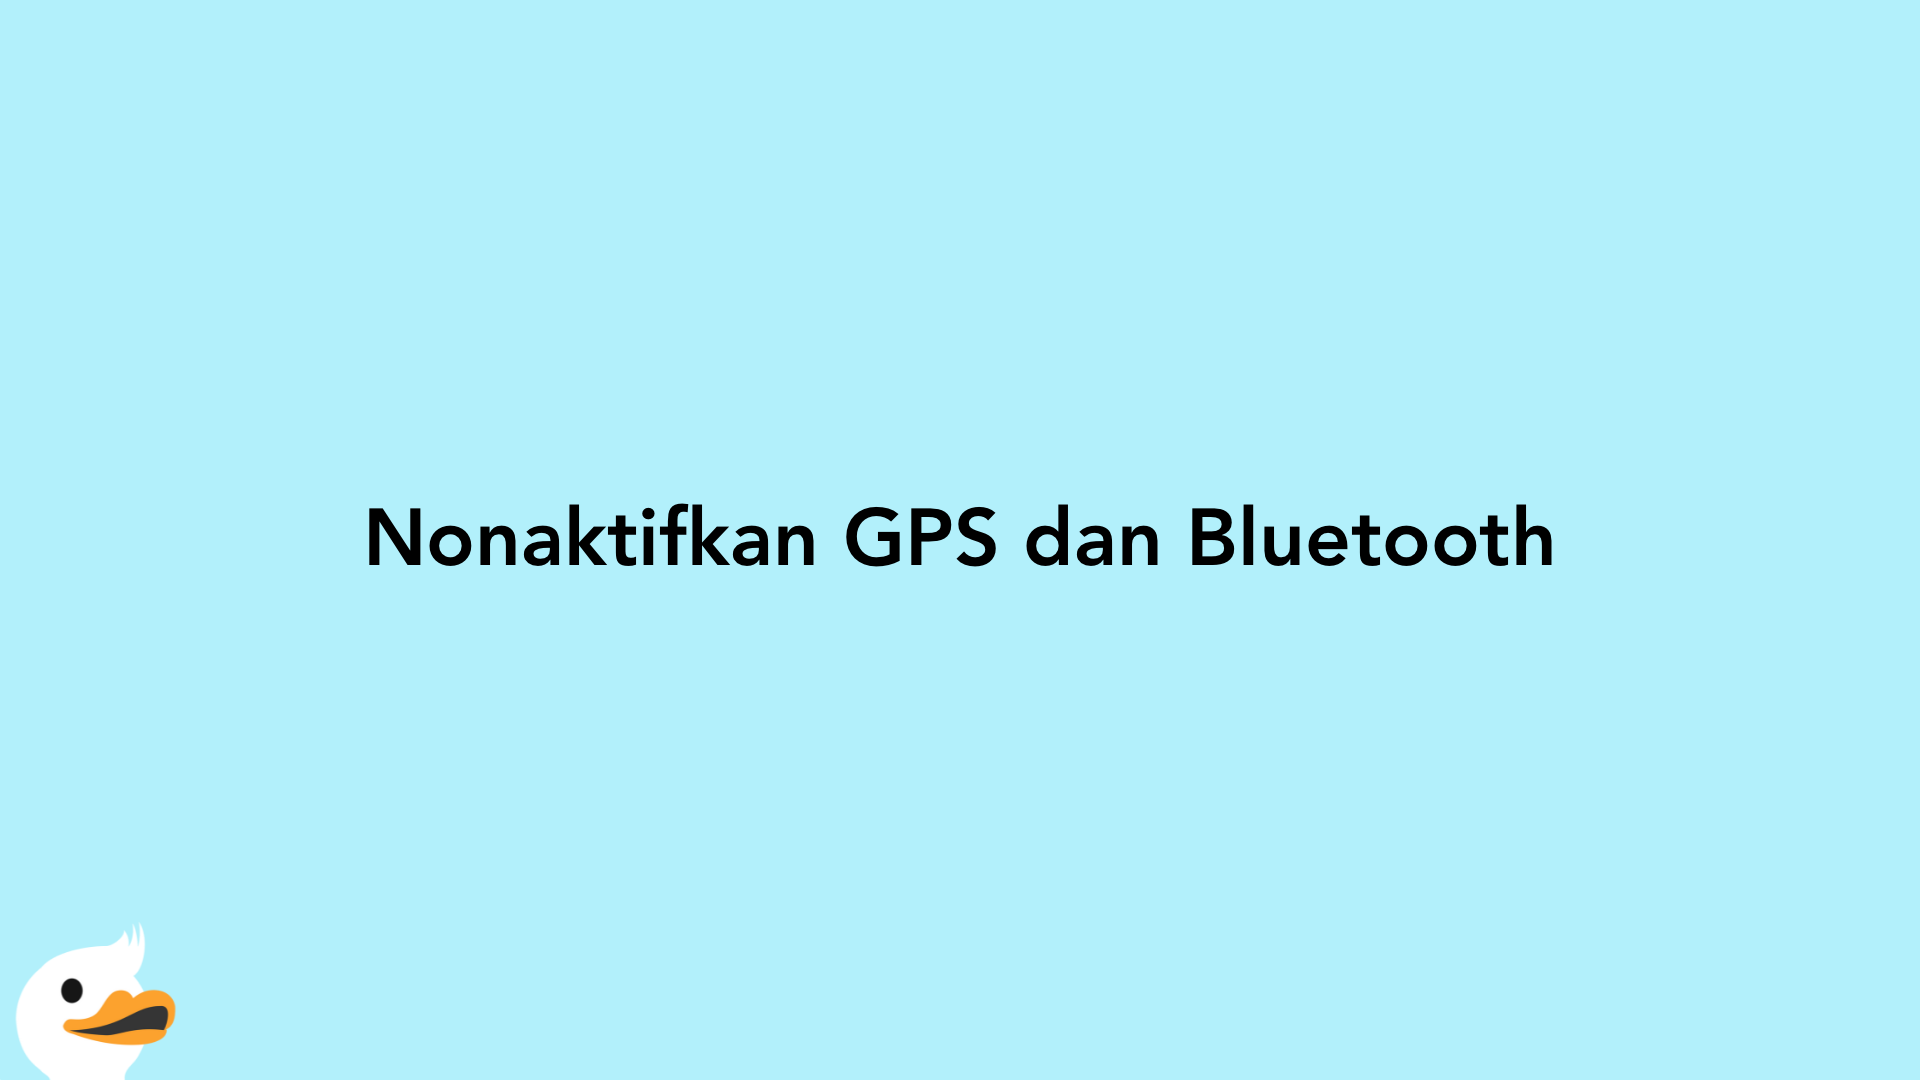 Nonaktifkan GPS dan Bluetooth